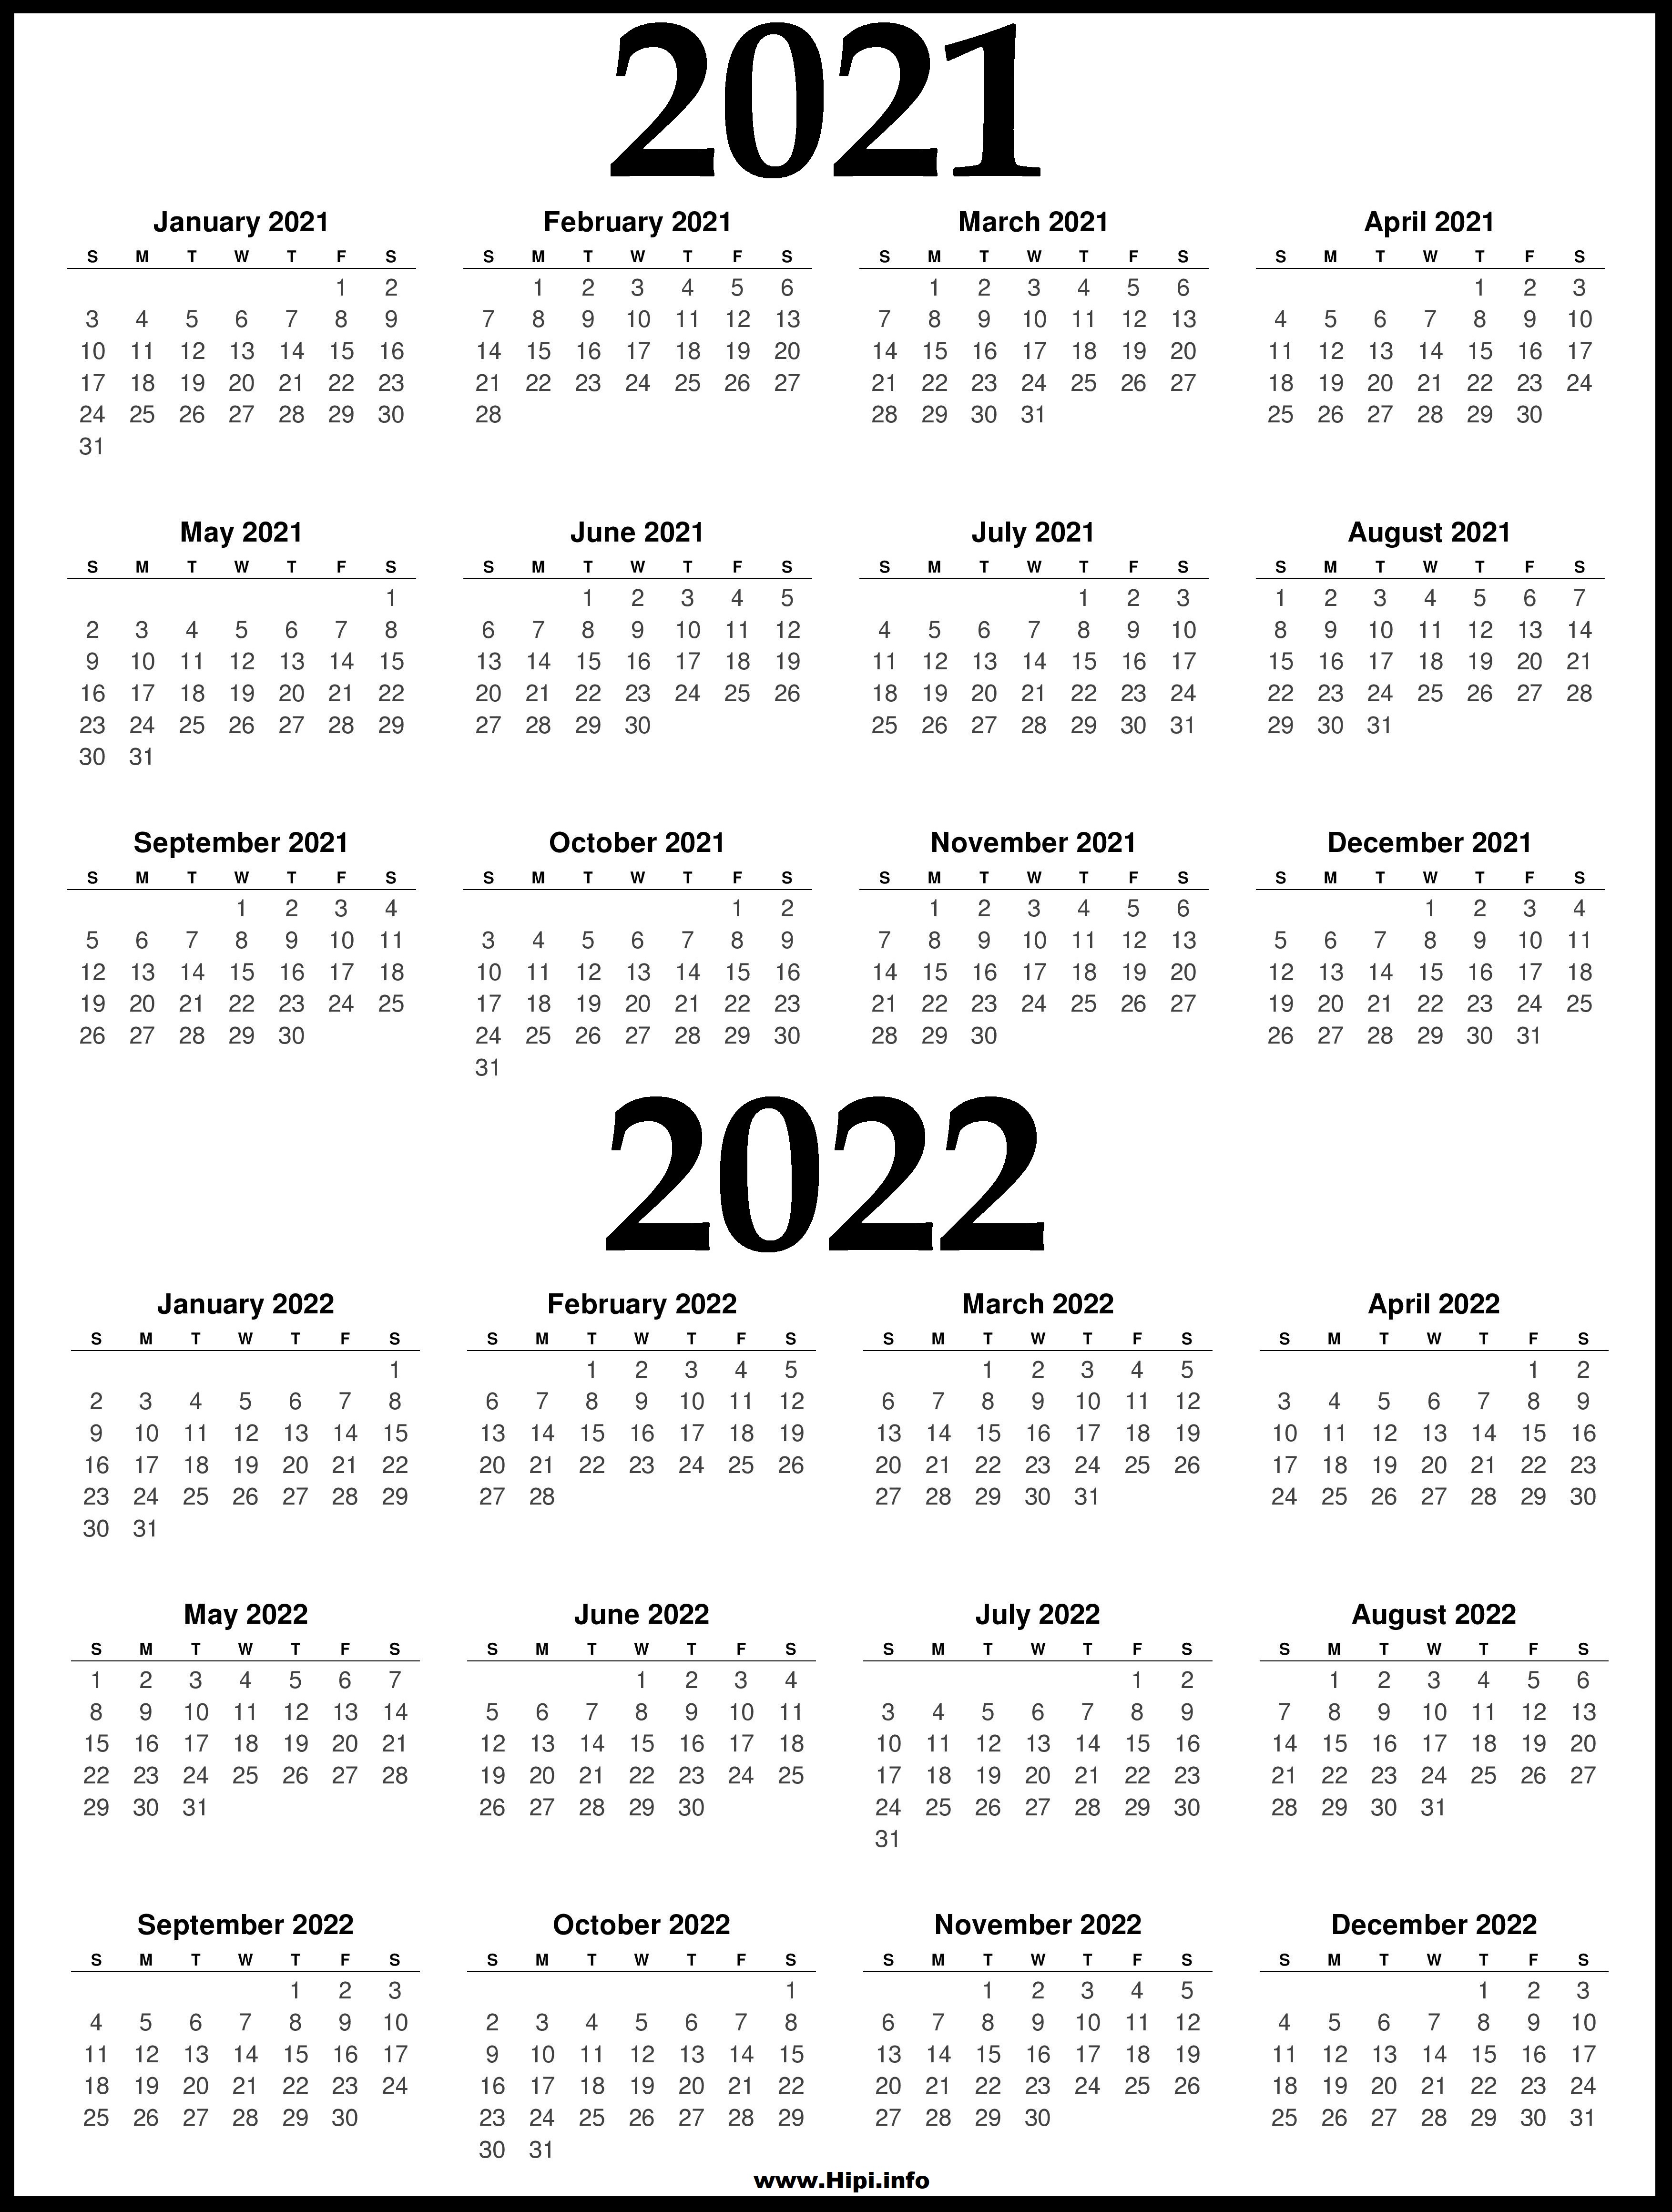 Free Printable 2021-2022 Calendar 2021 and 2022 Printable Calendar   2 Year Calendar   Hipi.info